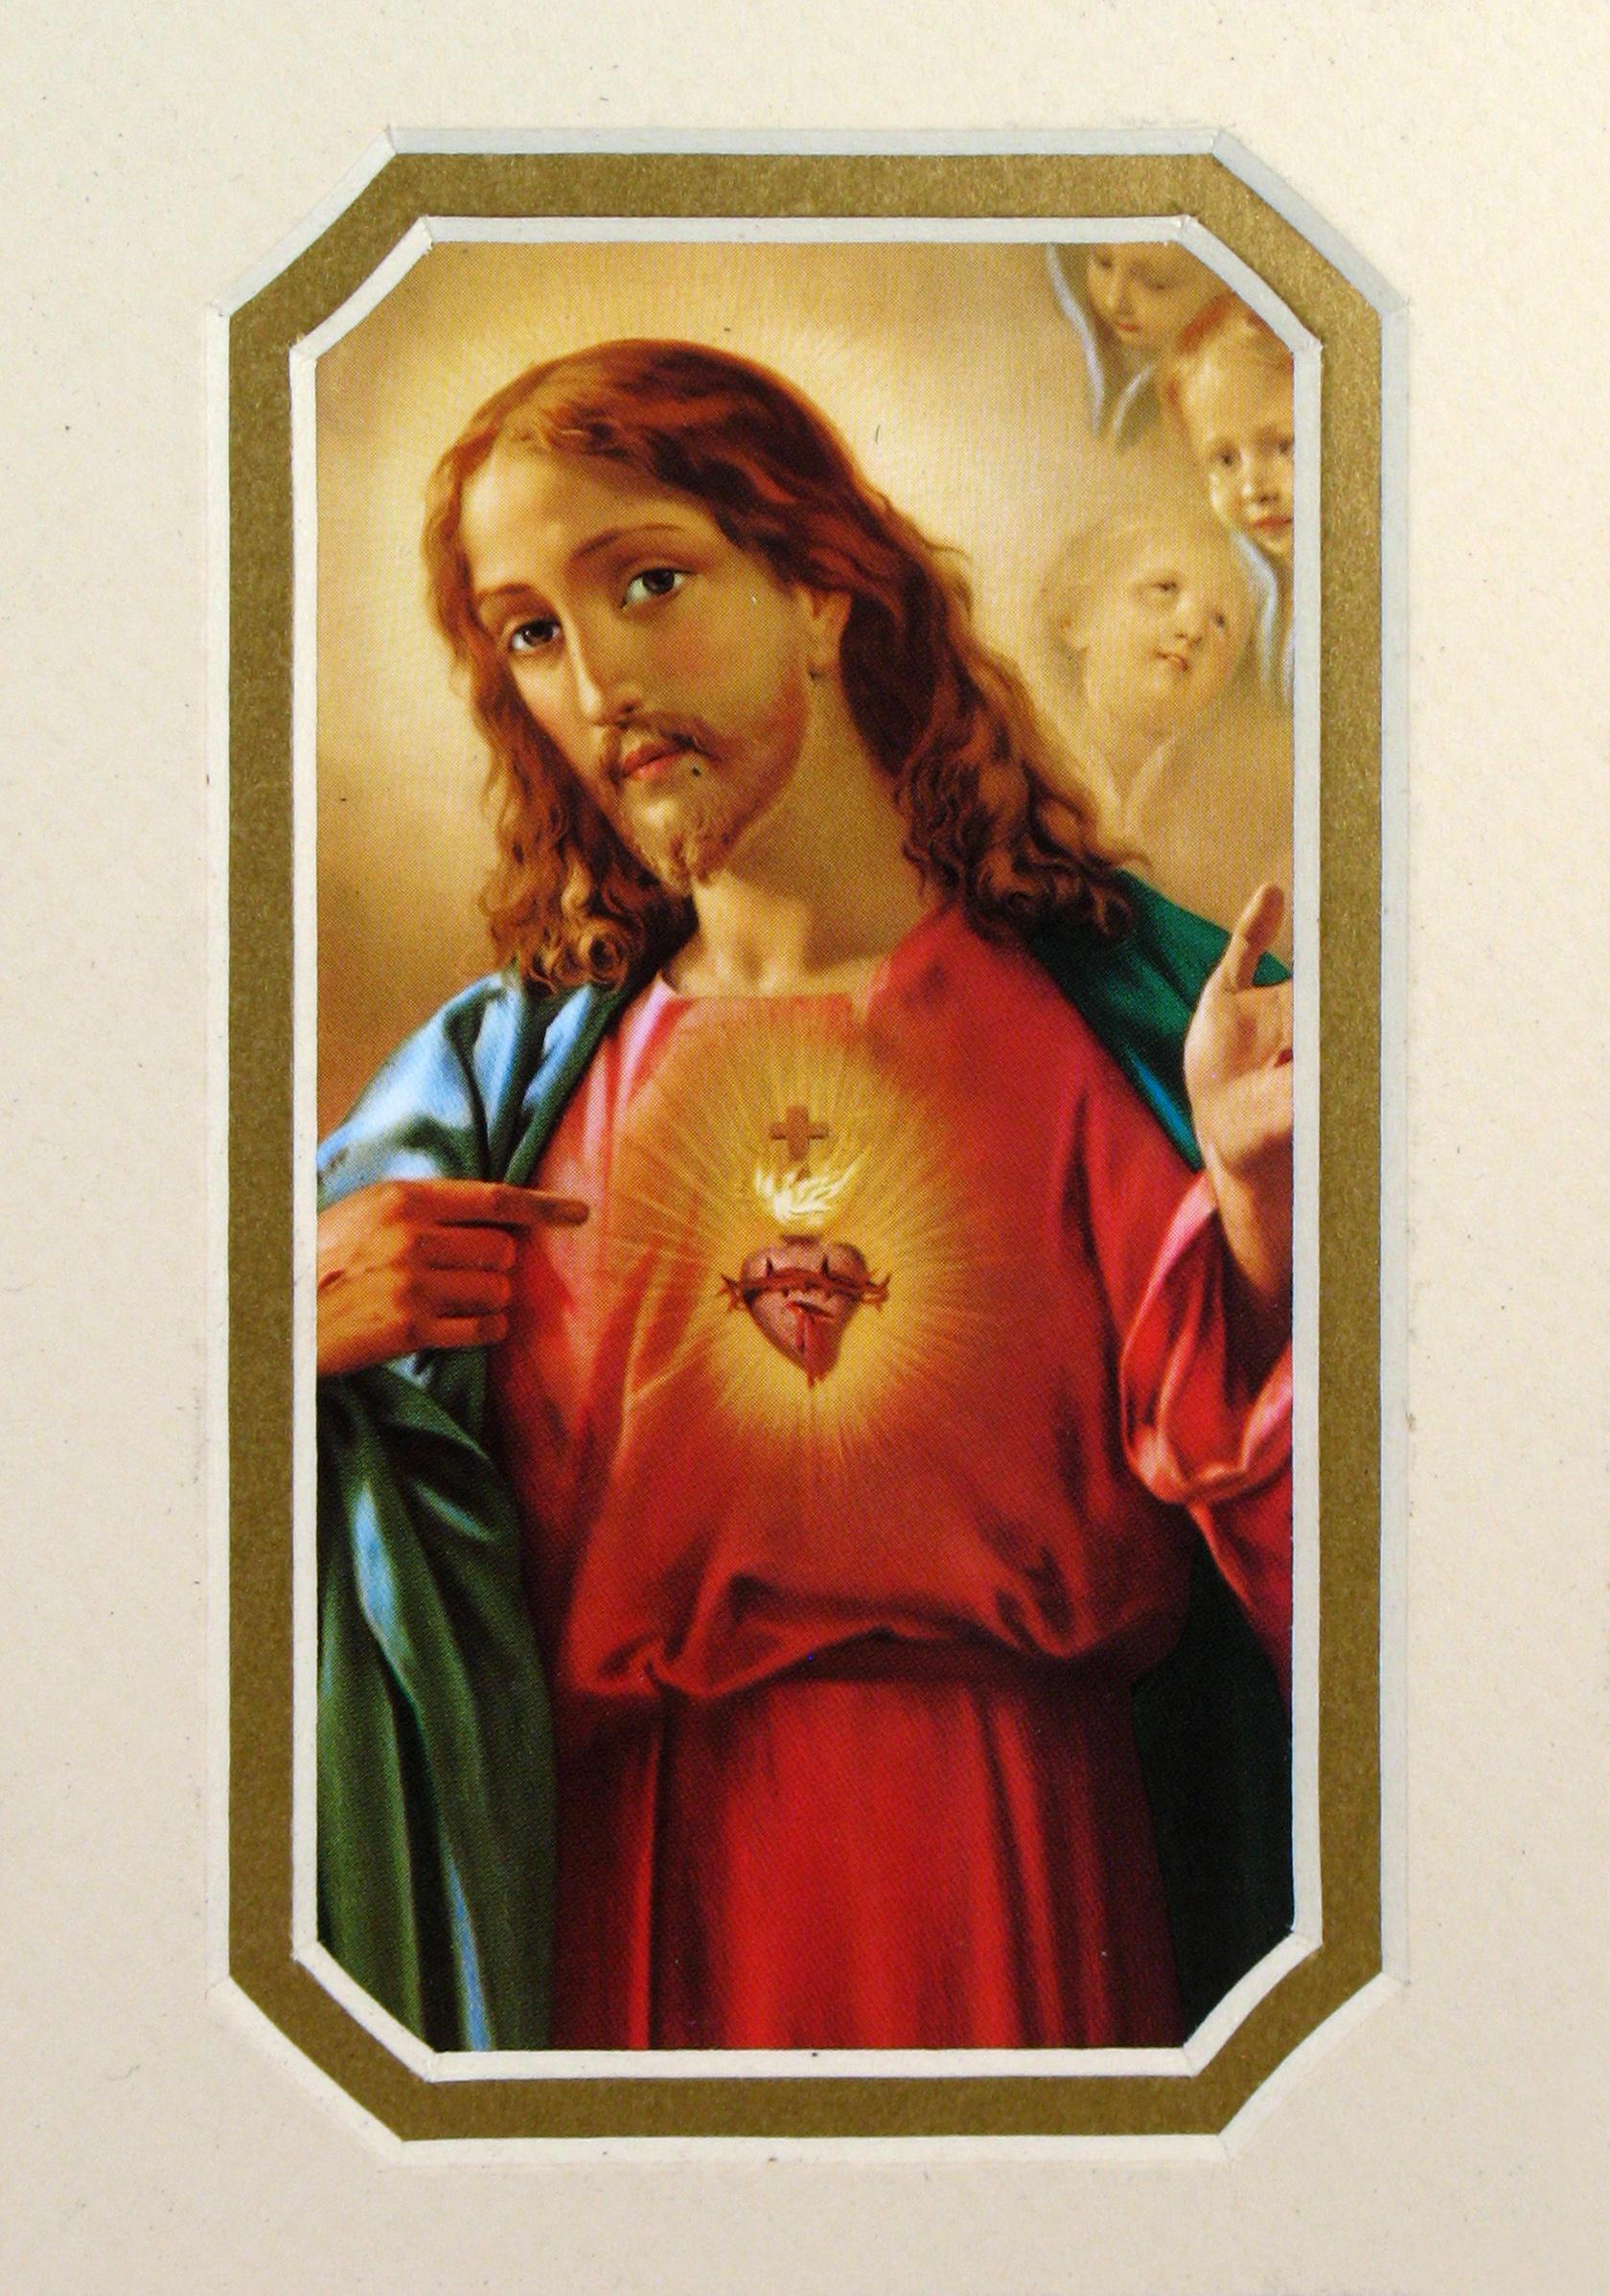 Sacred Heart of Jesus 3x5 Prayerful Mat #35MAT-SHJ(M)